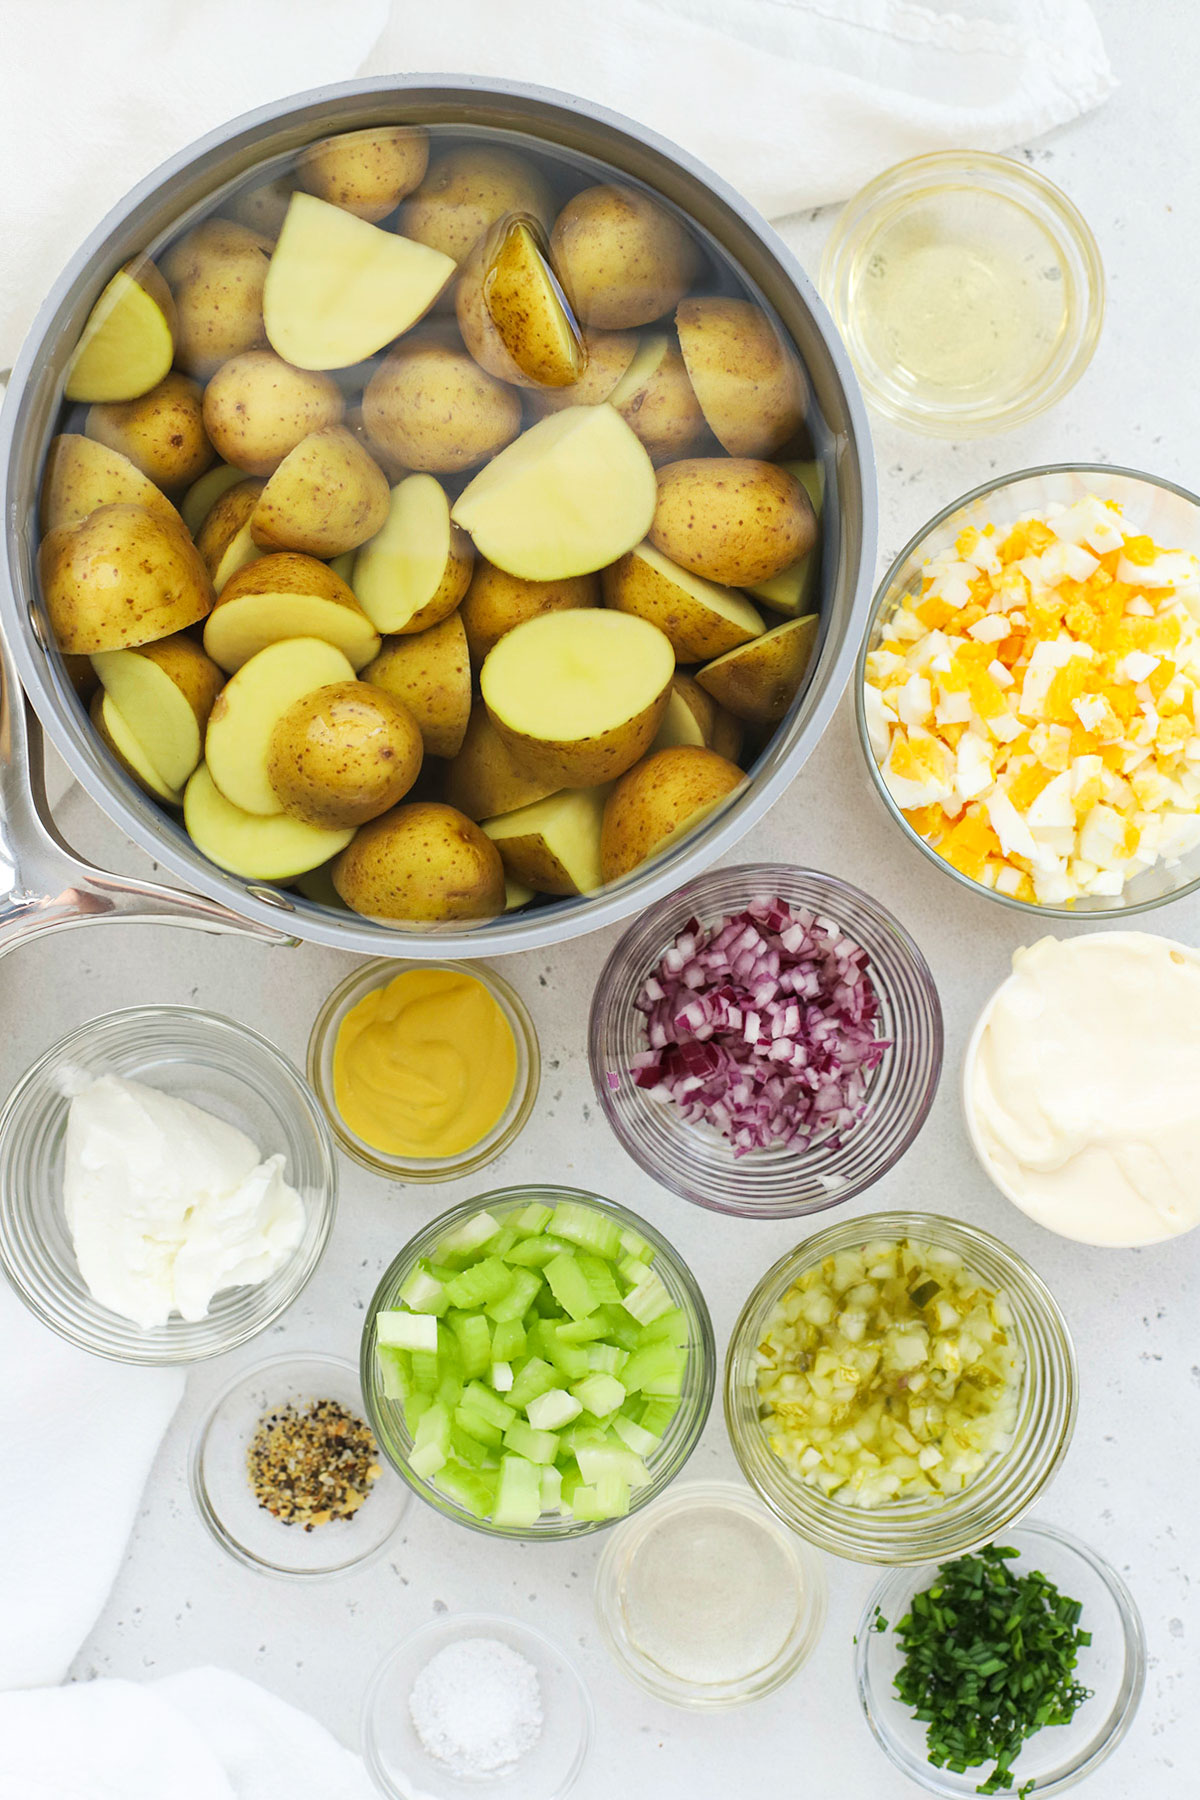 Ingredients for gluten-free potato salad